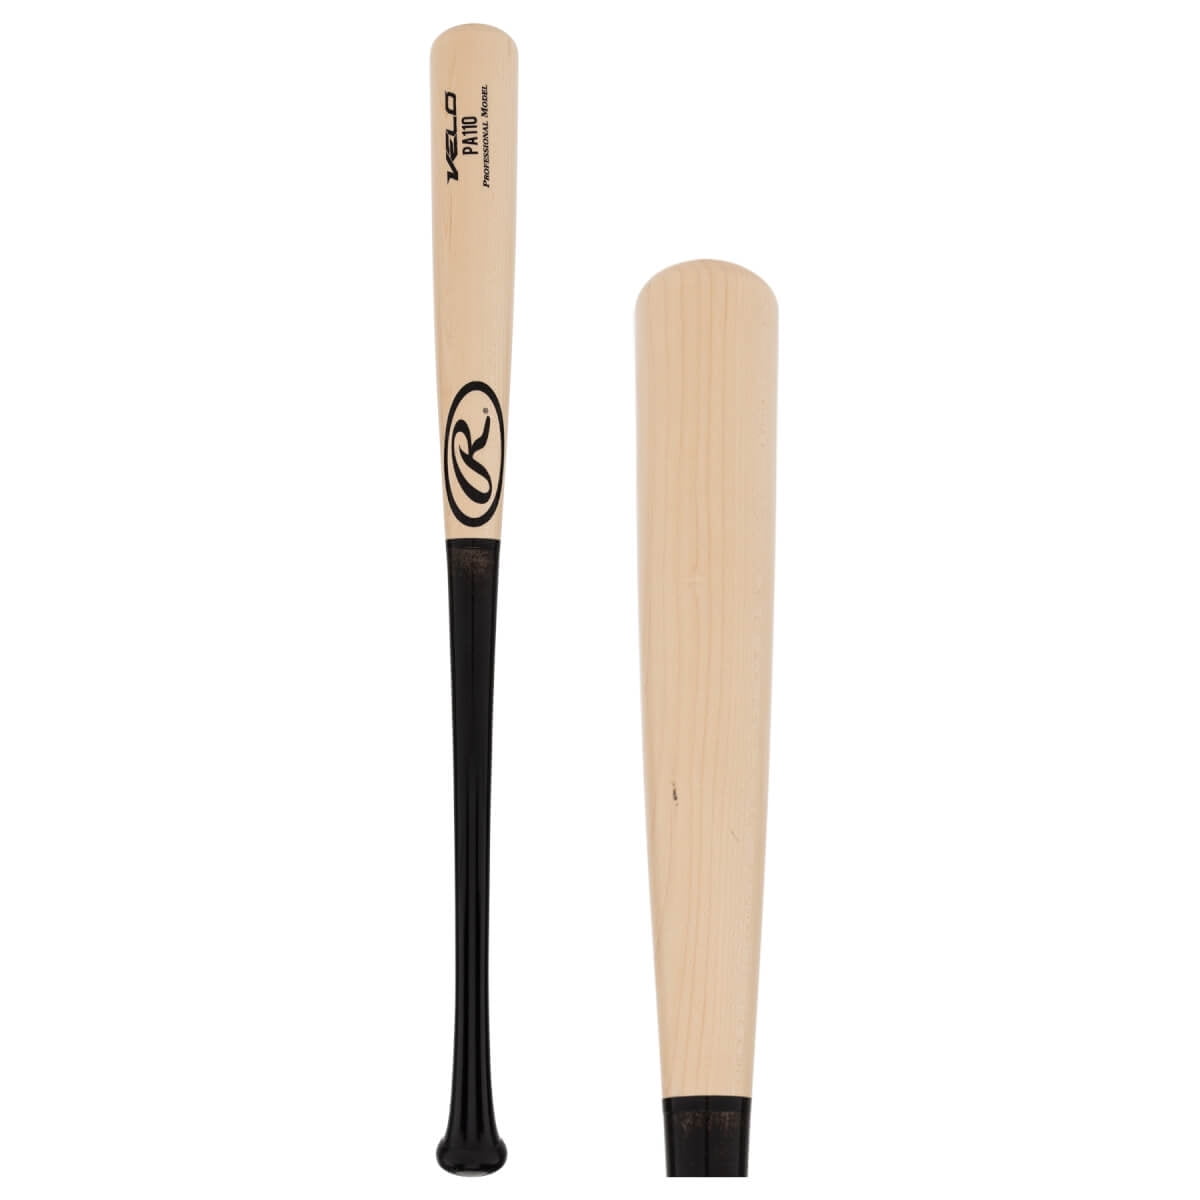 9 32" Wood Baseball Maple Blem Bats Top Quality 